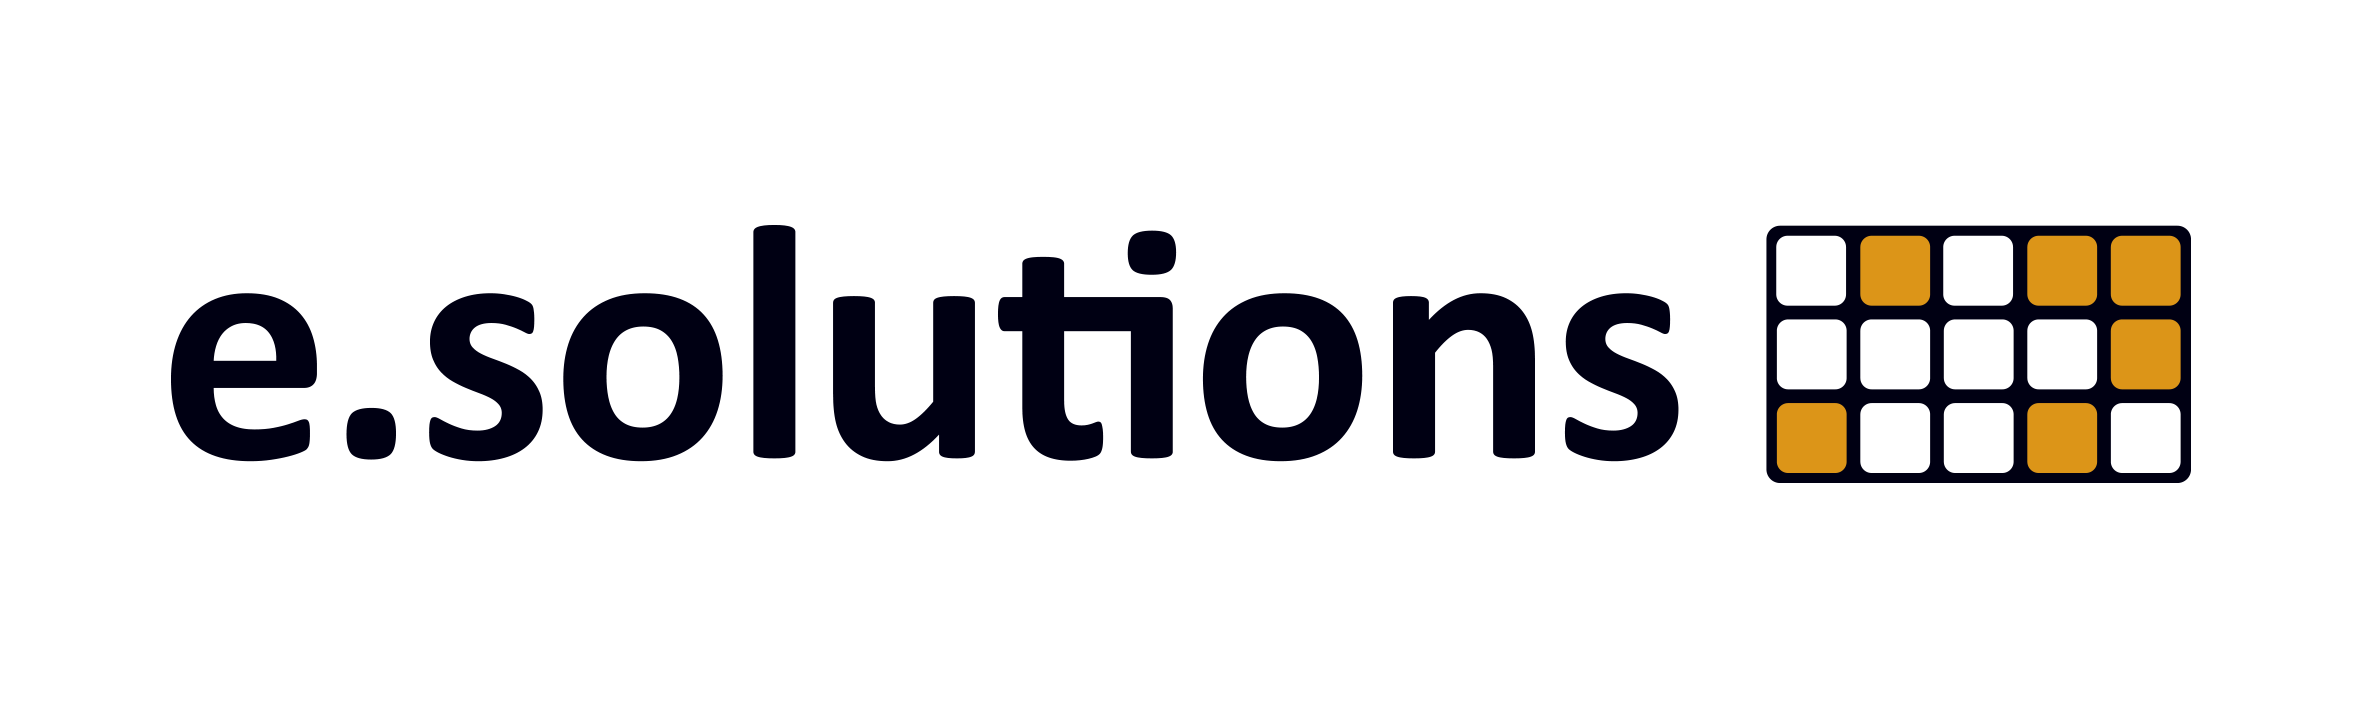 e.solutions GmbH Logo